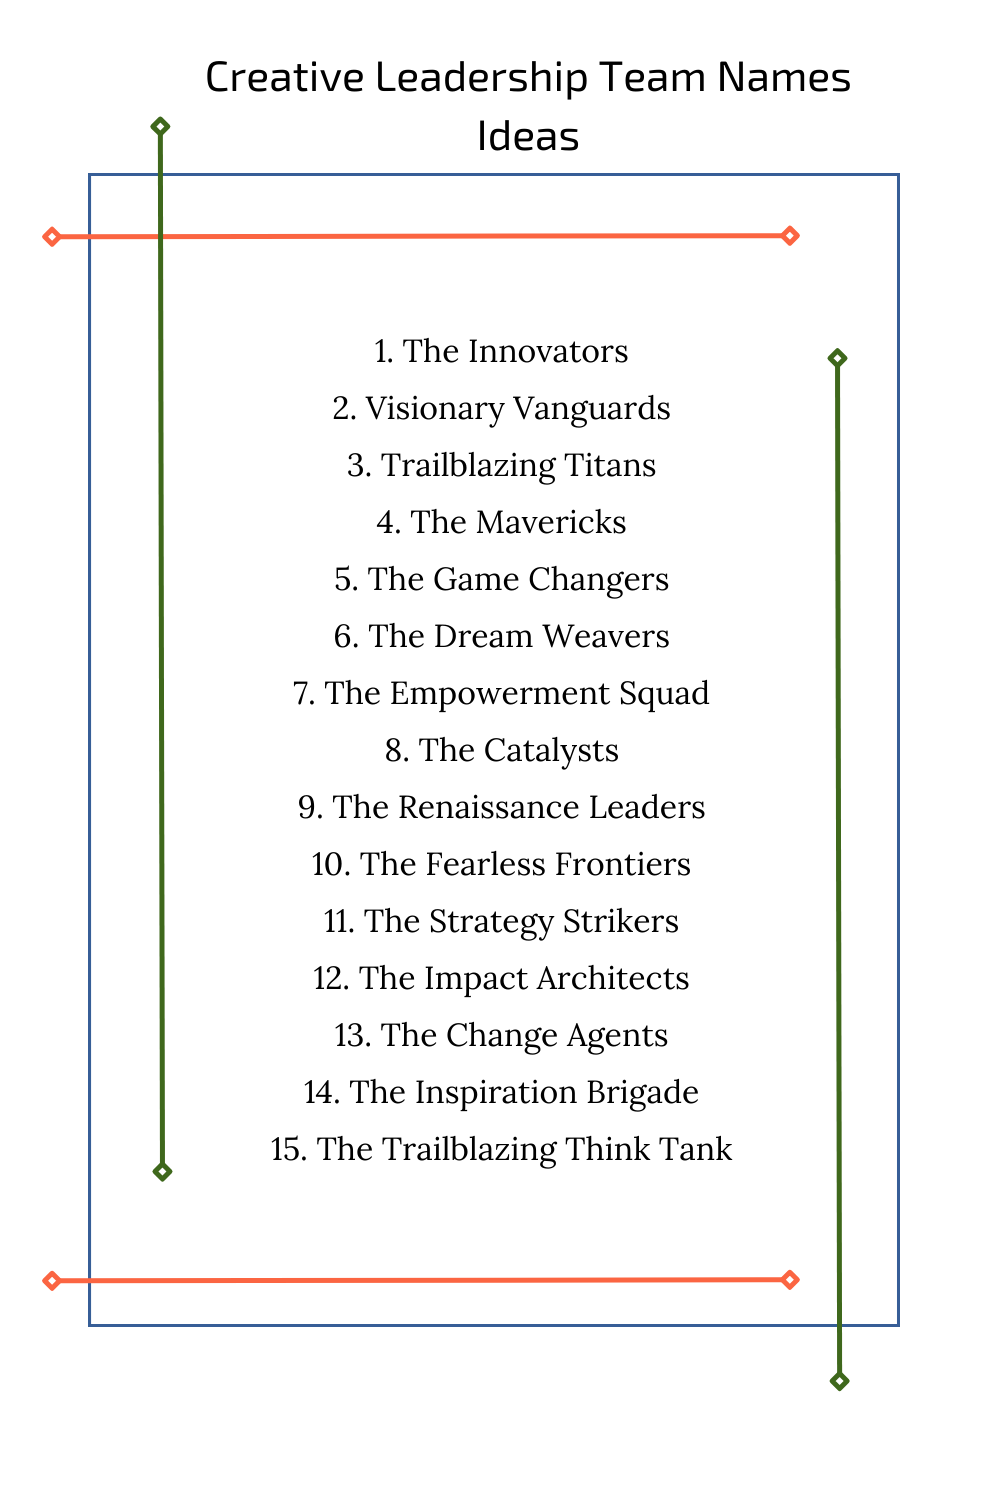 Creative Leadership Team Names Ideas